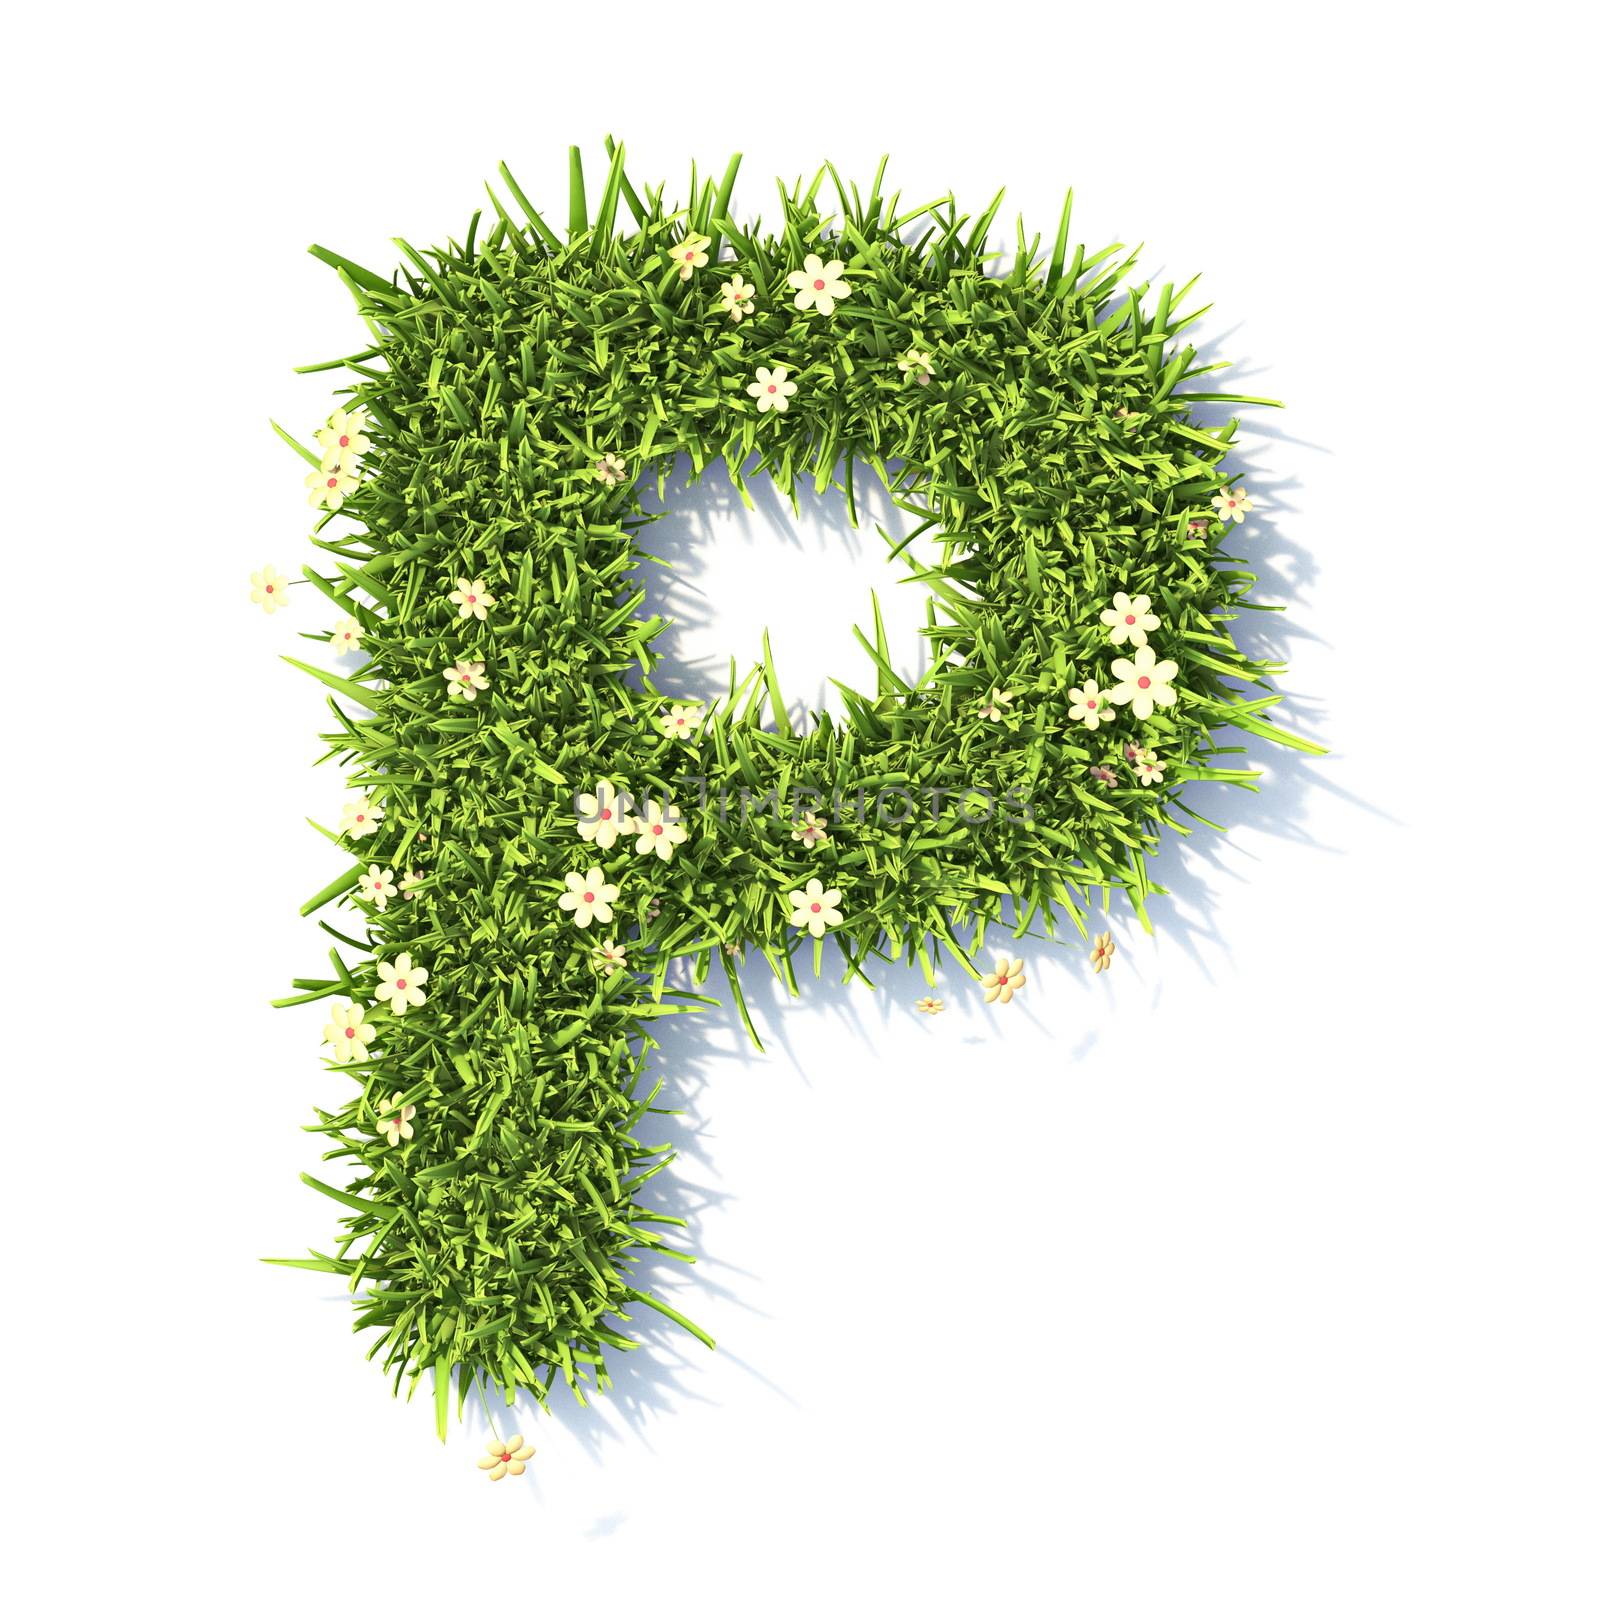 Grass font Letter P 3D rendering illustration isolated on white background